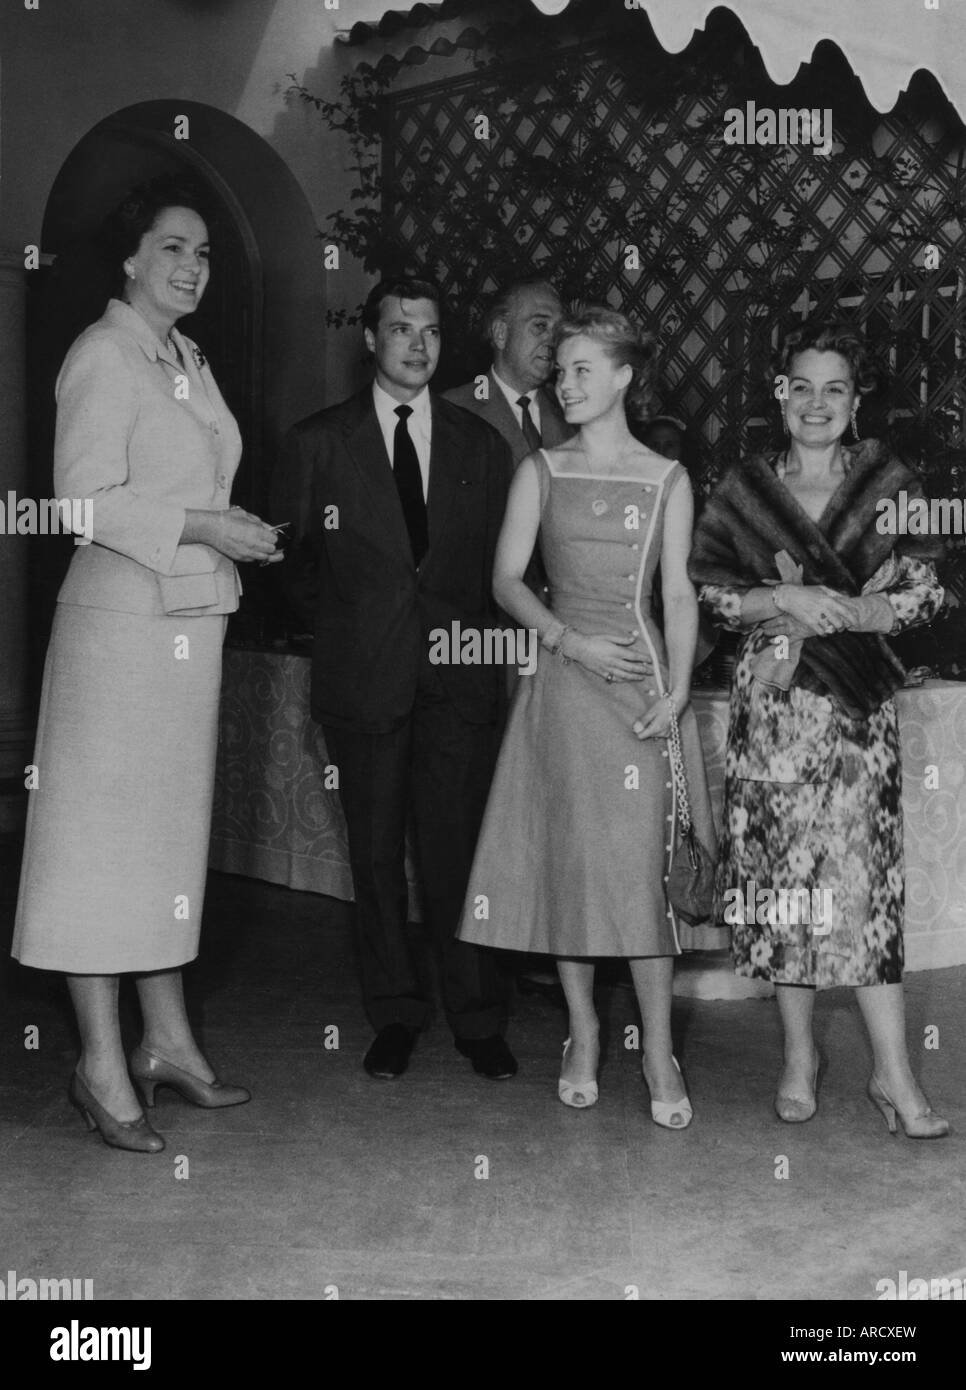 Schneider, Romy, 23.9.1938 - 29.5.1982, actrice allemande, pleine longueur, avec épouse d'Aga Khan, Karlheinz Böhm, Begum, Magda Schneider, Banque D'Images